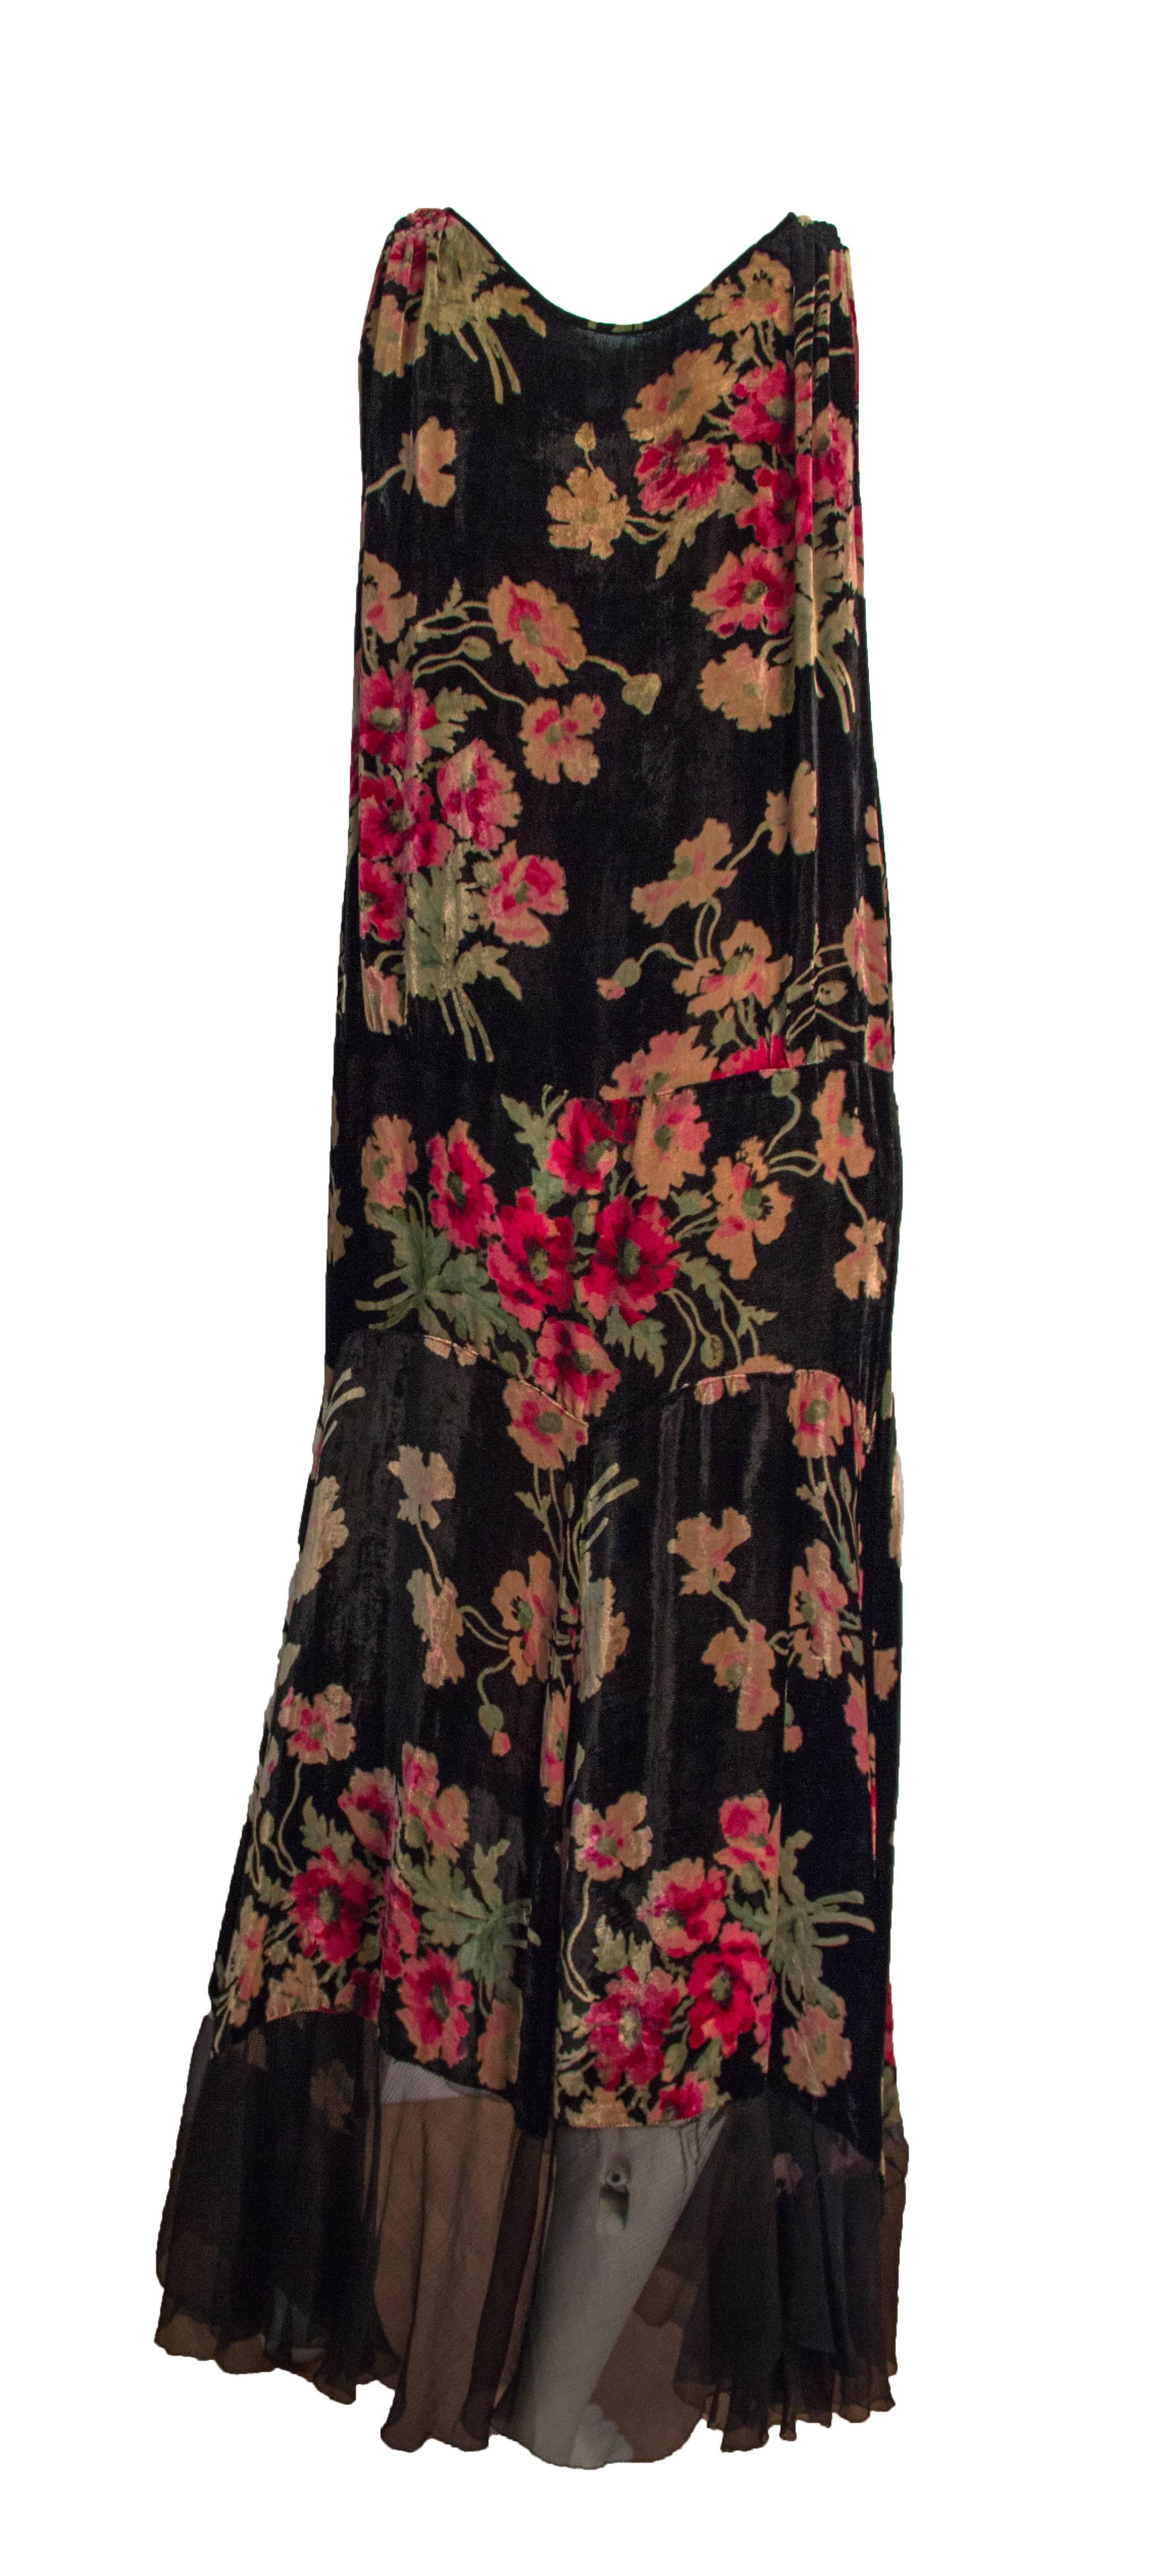 20s velvet floral printed drop waist dress with beaded embellishment along bust line. Chiffon trim along hemline. Unlined 